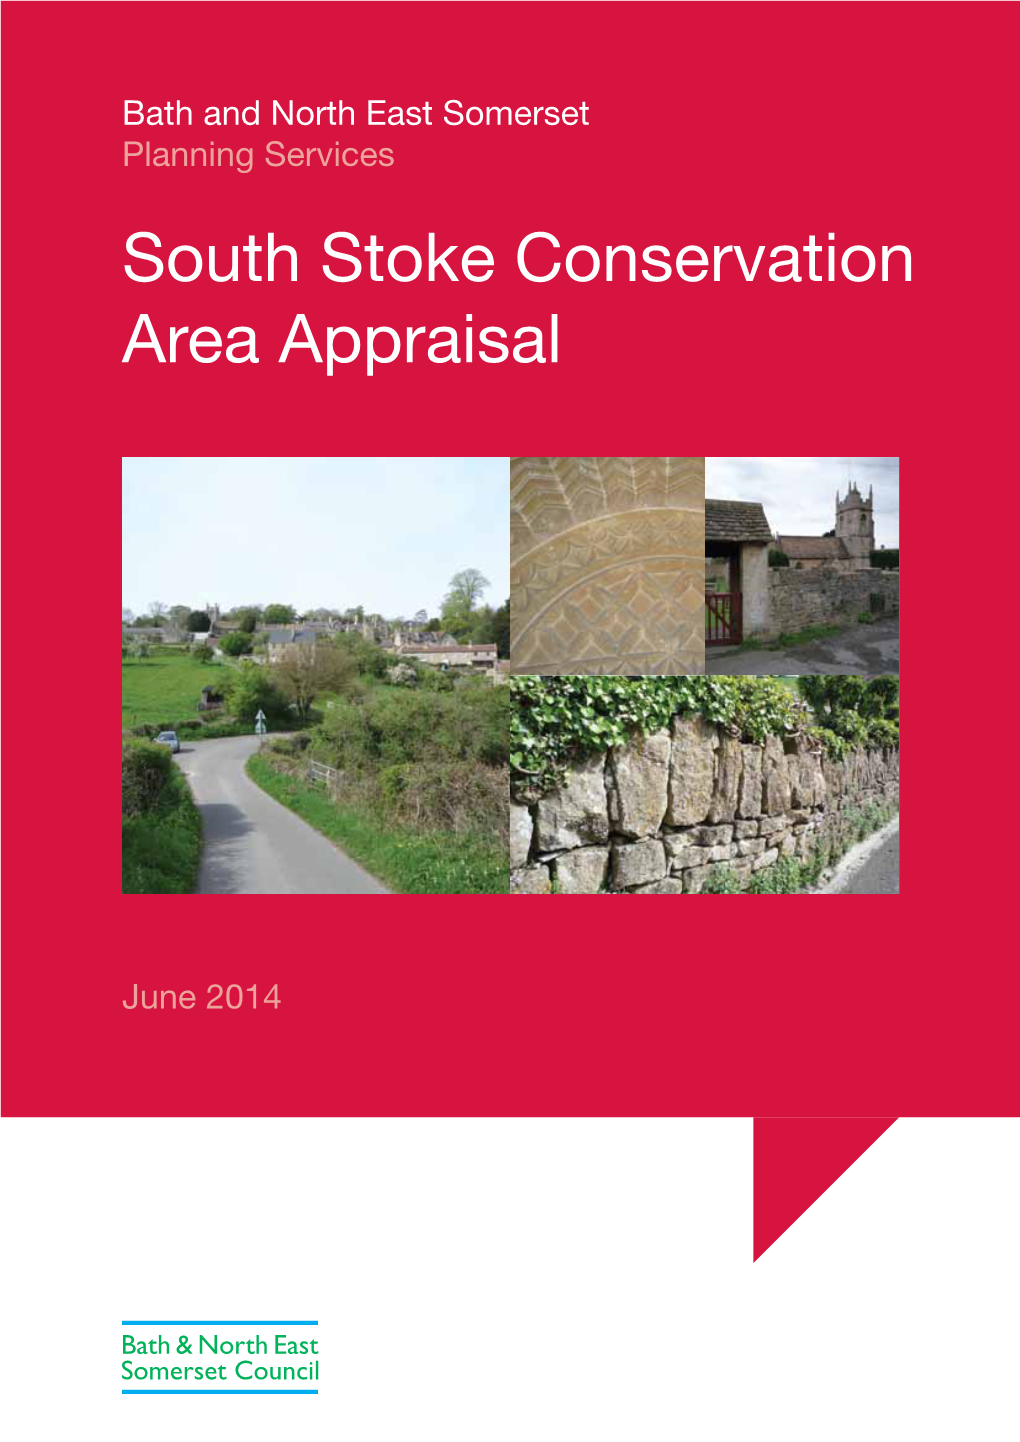 South Stoke Conservation Area Appraisal